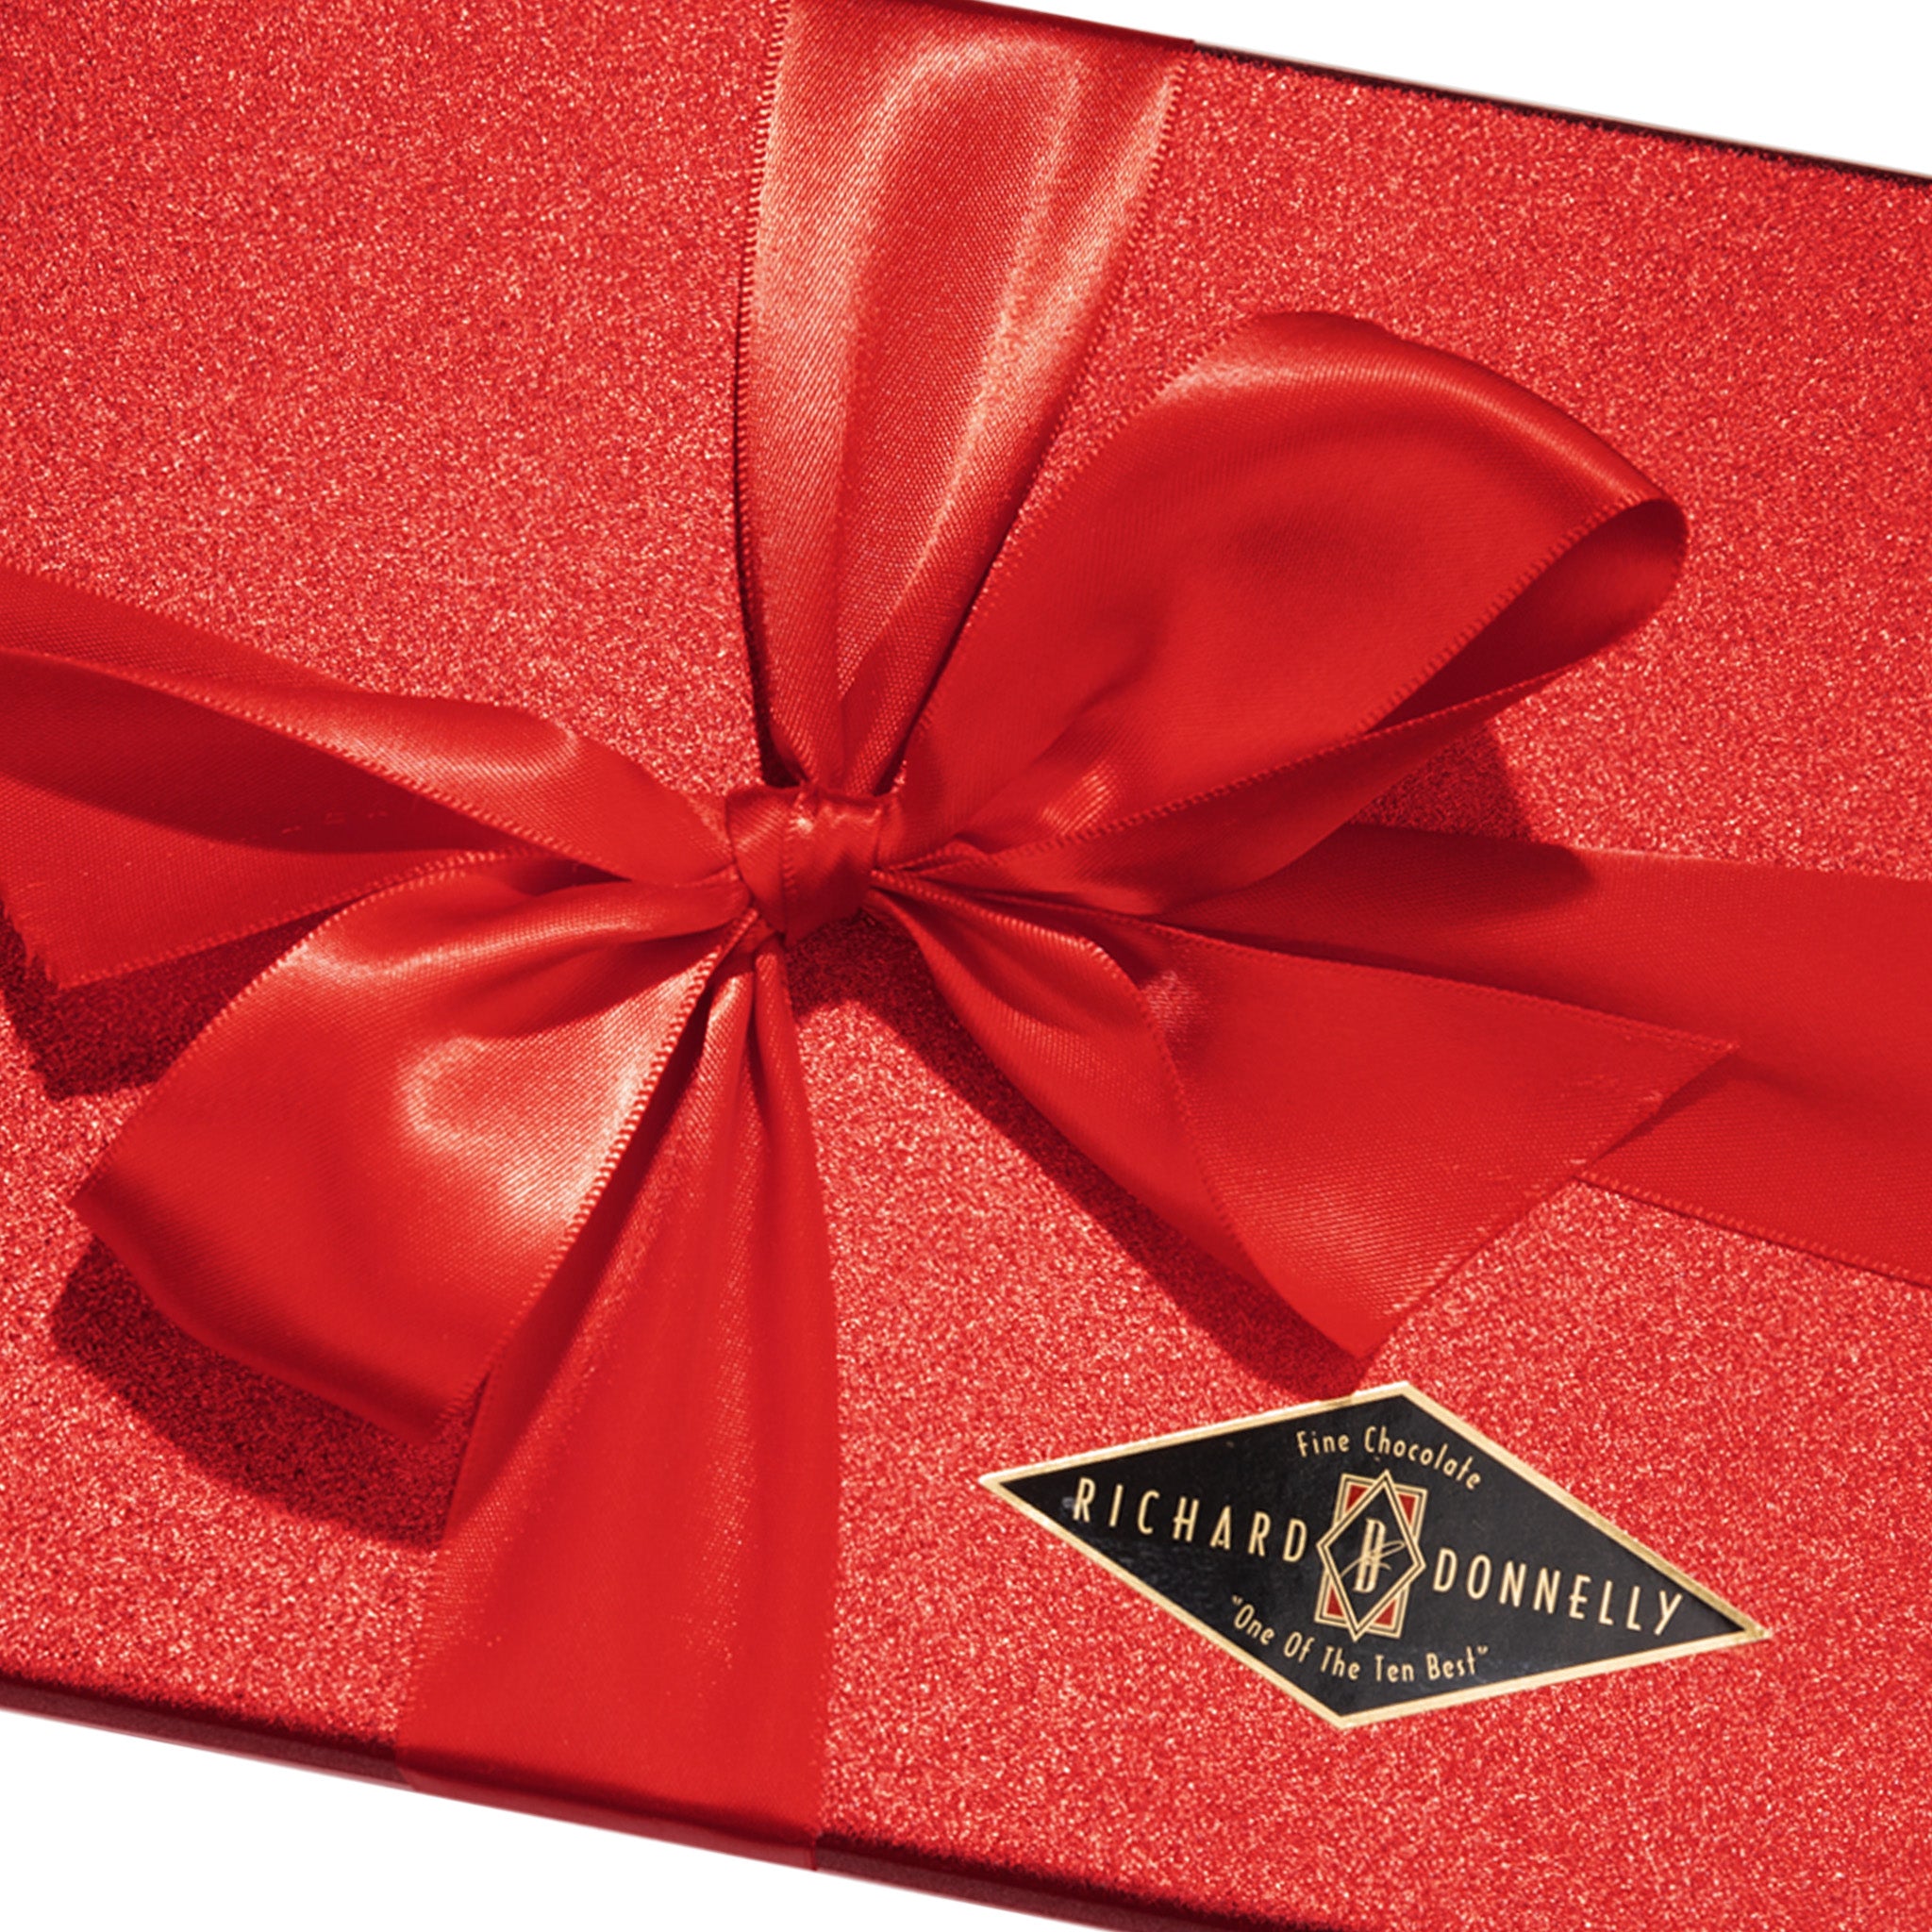 dark chocolate spread: a last minute gift idea for Christmas